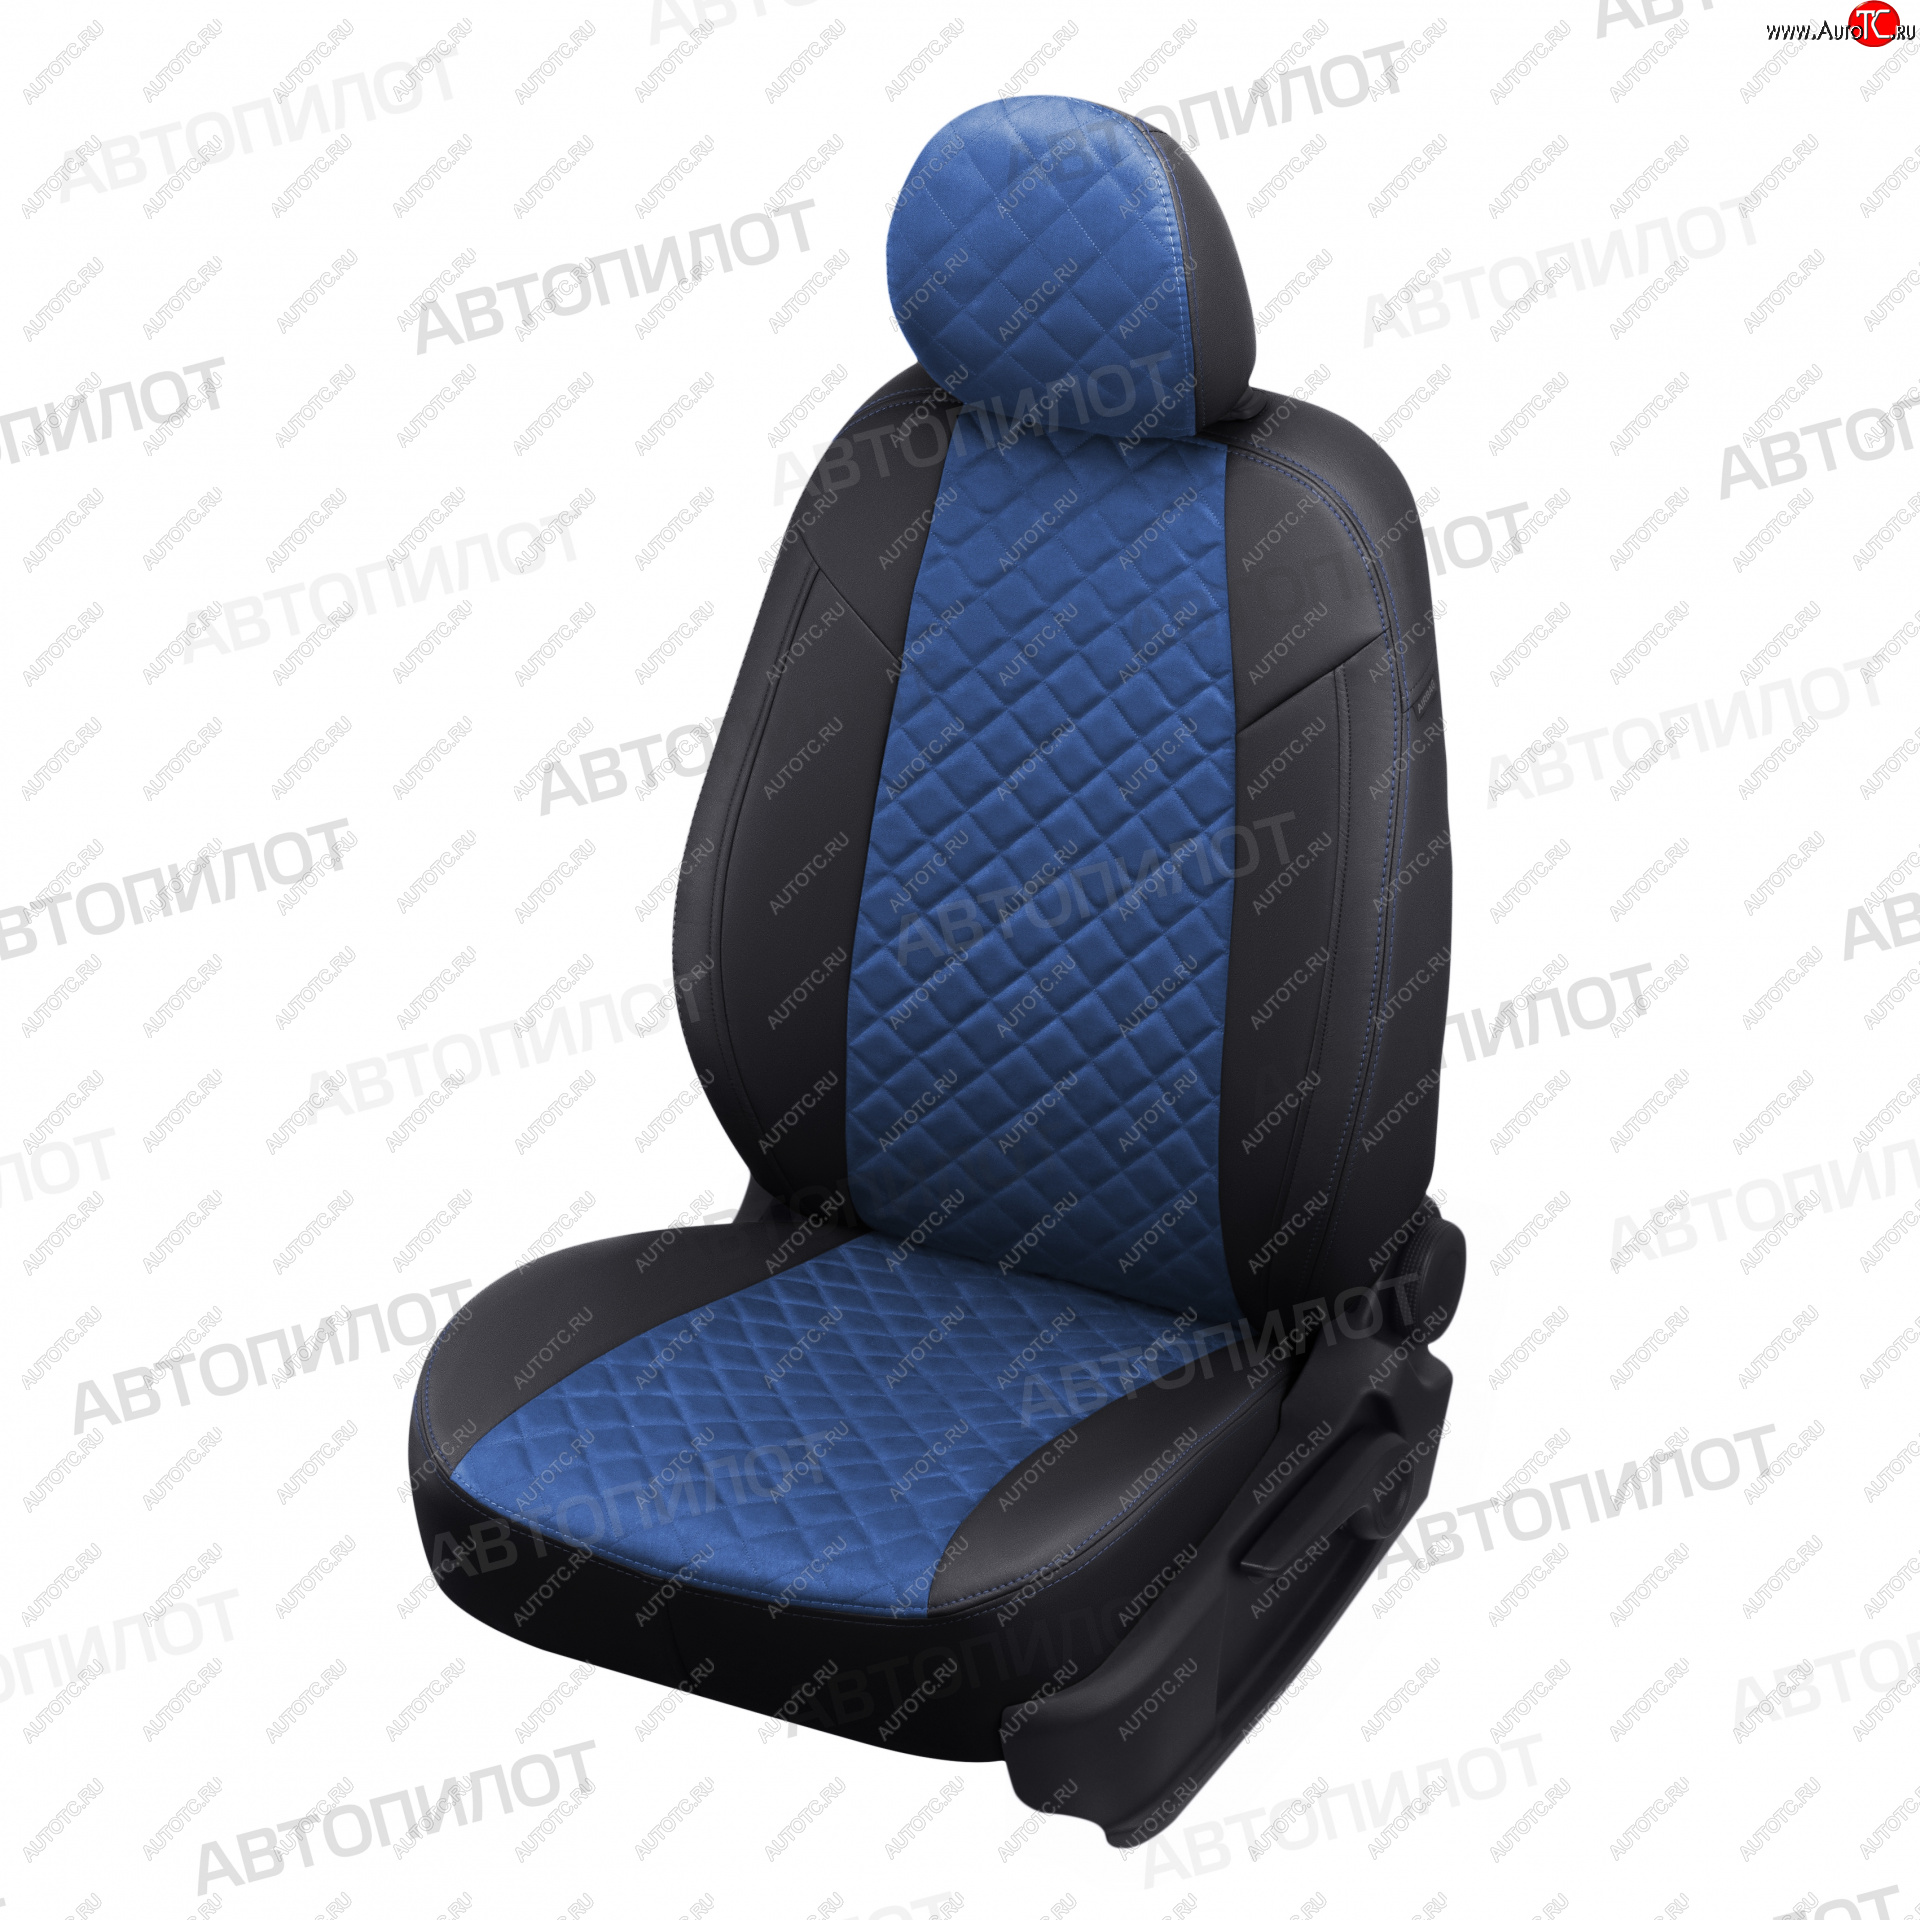 13 999 р. Чехлы сидений (экокожа/алькантара) Автопилот Ромб  Ford S-Max  1 (2006-2015) (черный/синий)